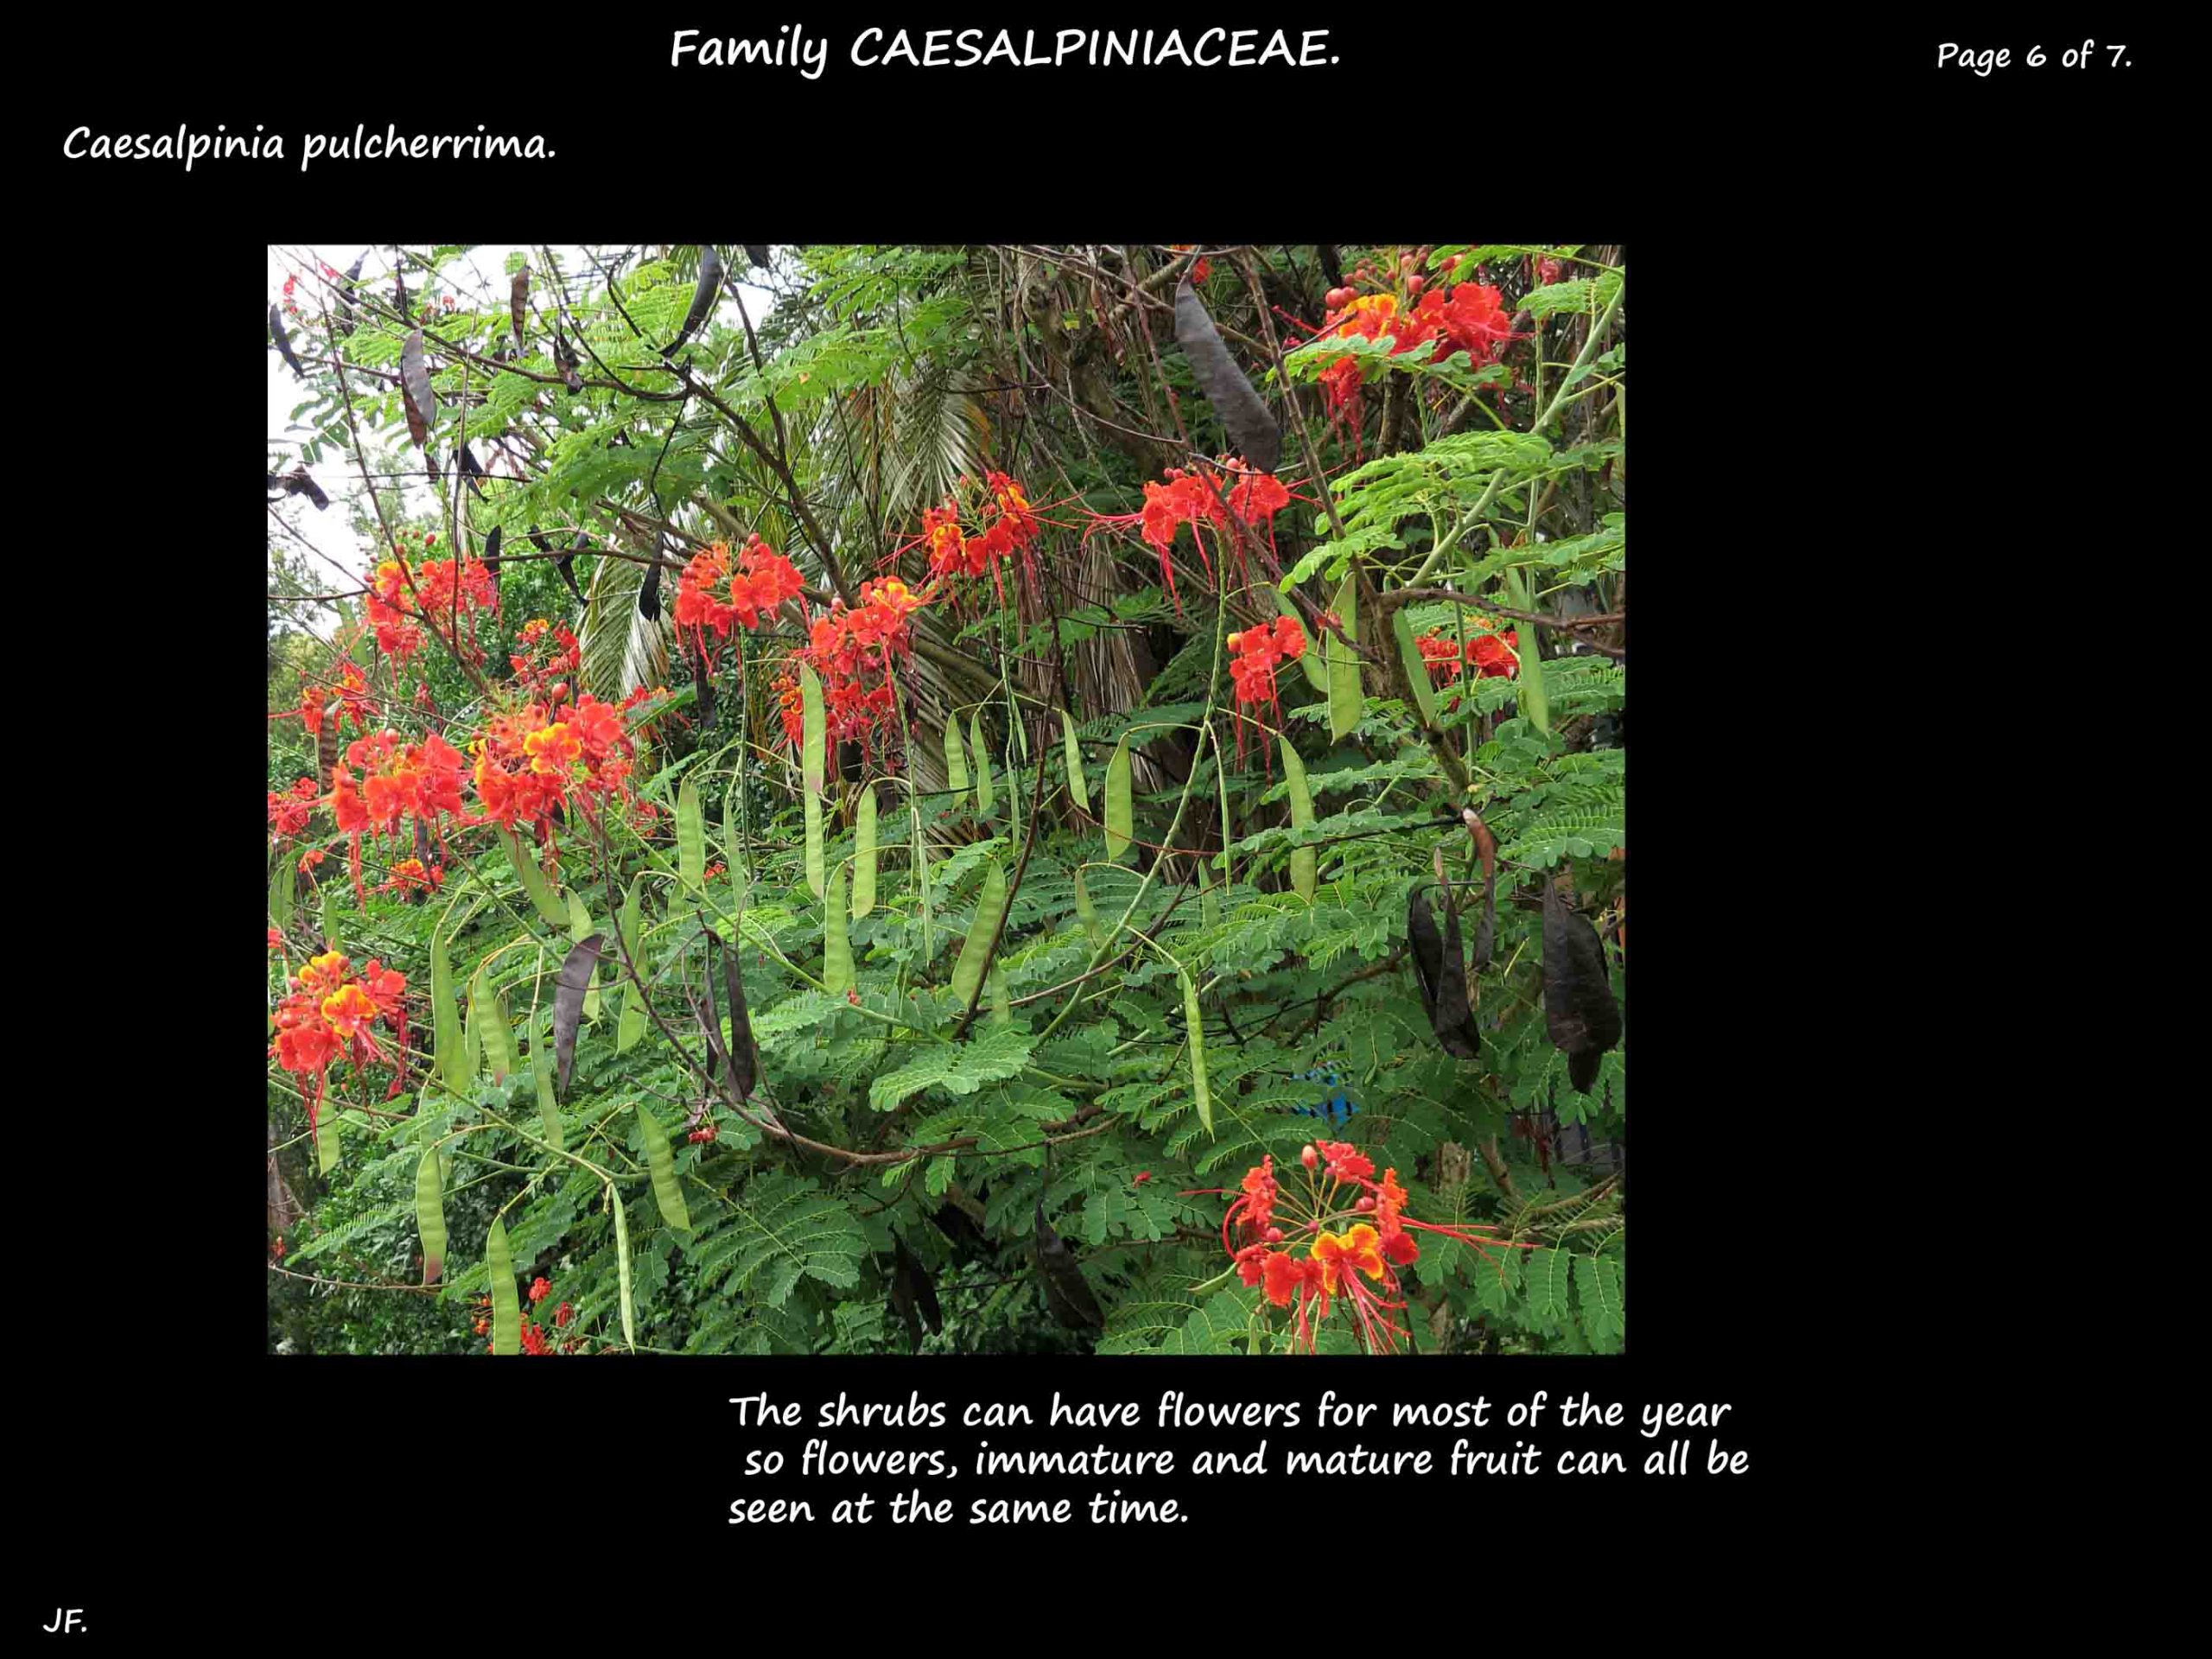 6 Caesalpinia pulcherrima flowers & pods